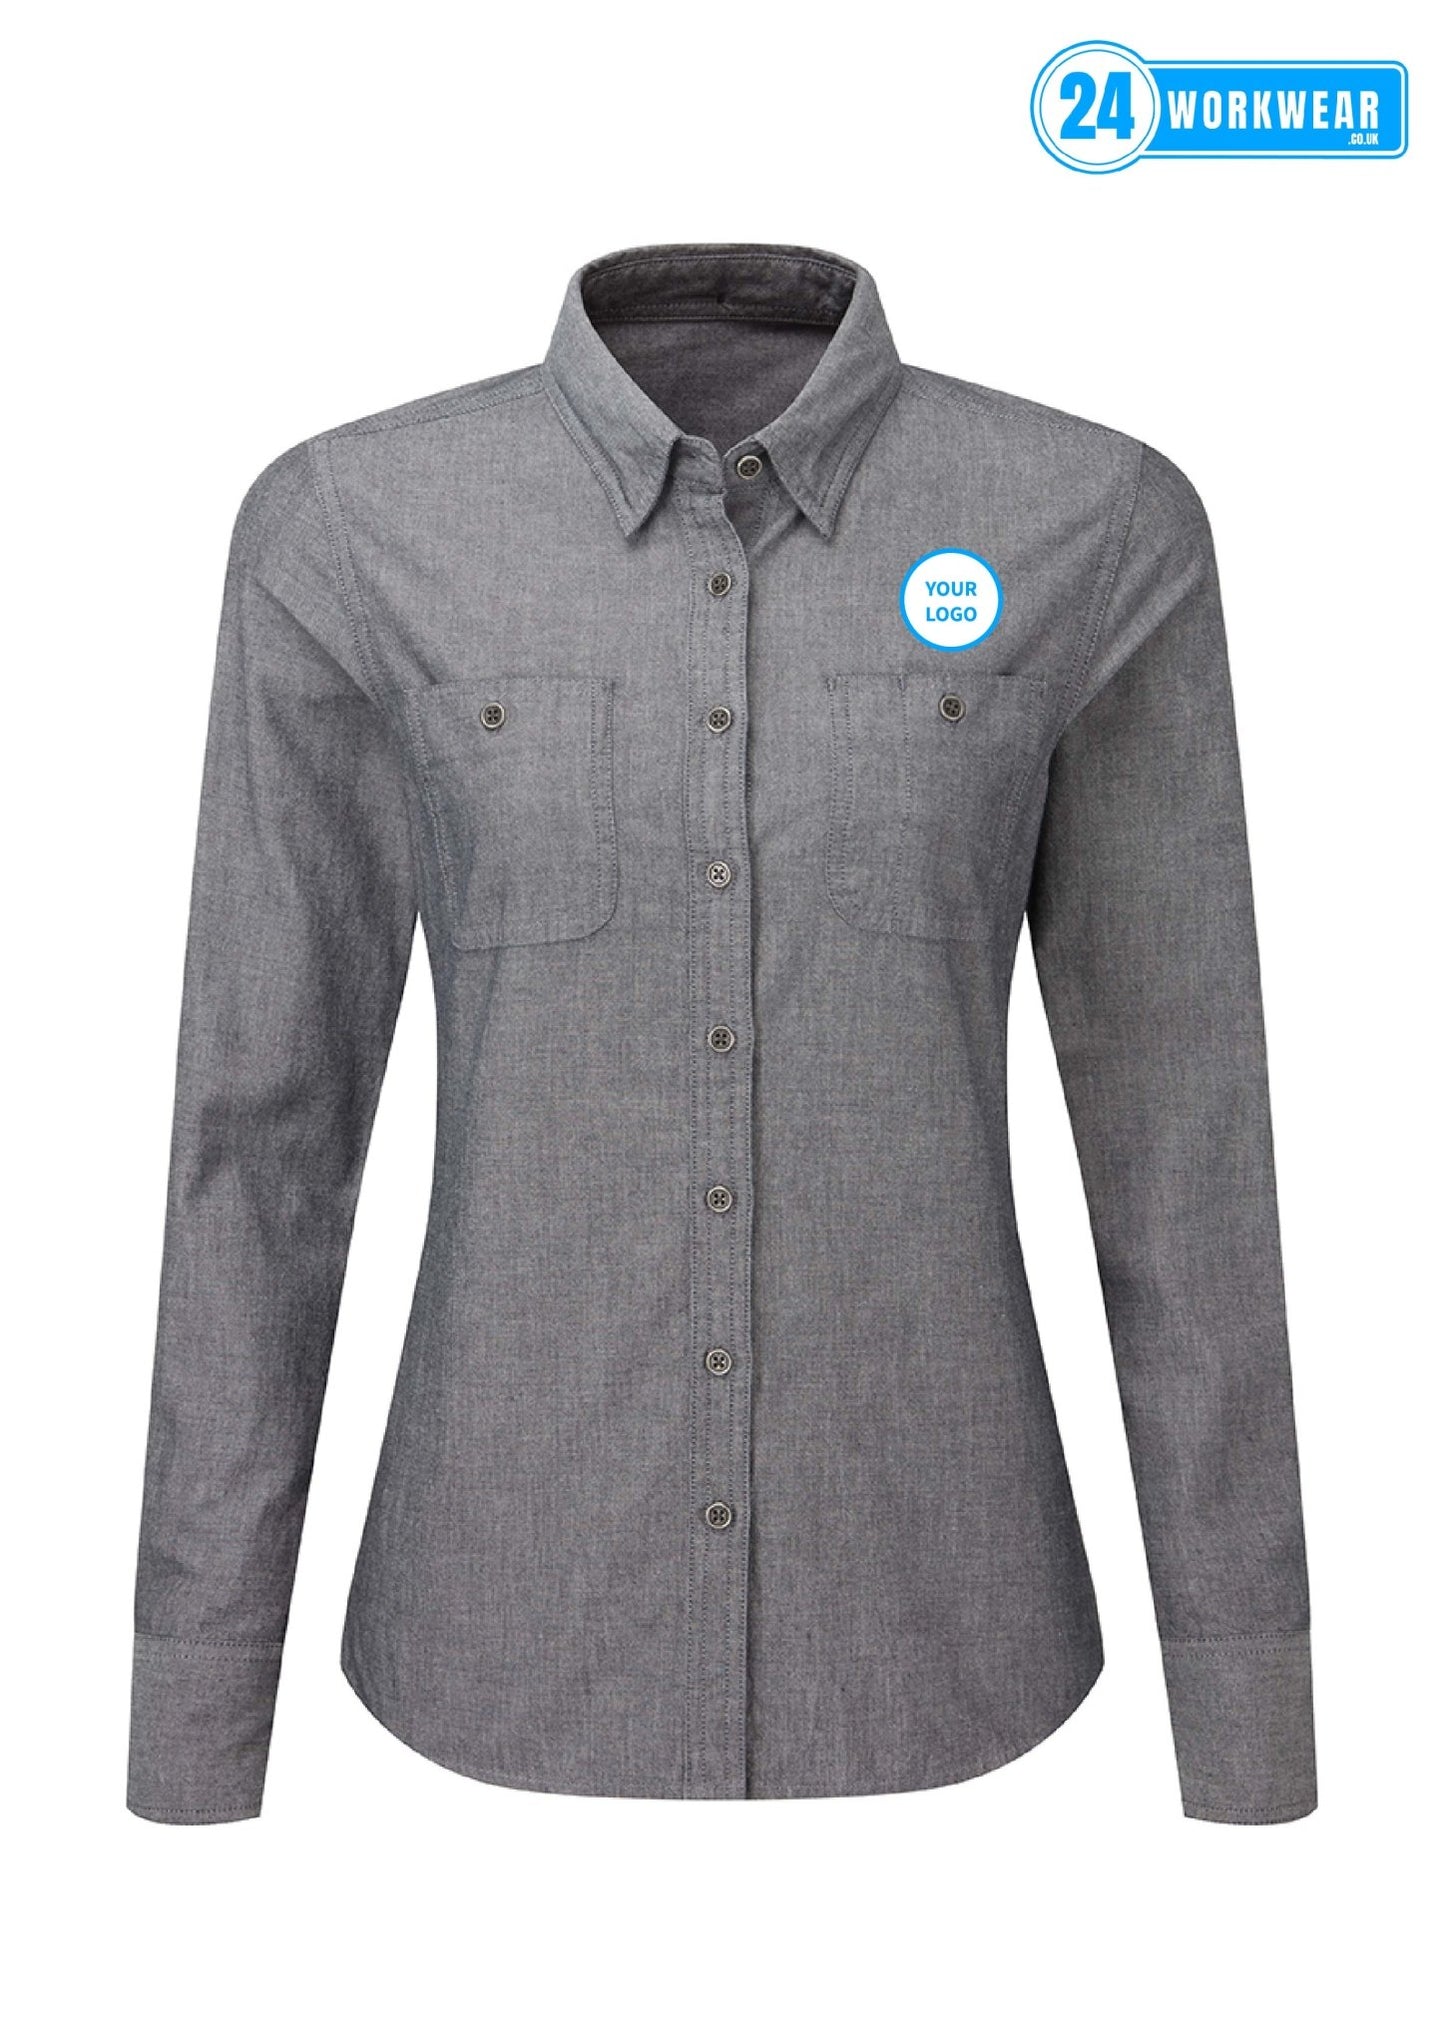 Premier Ladies Organic Fairtrade Long Sleeve Chambray Shirt - 24 Workwear - Shirt